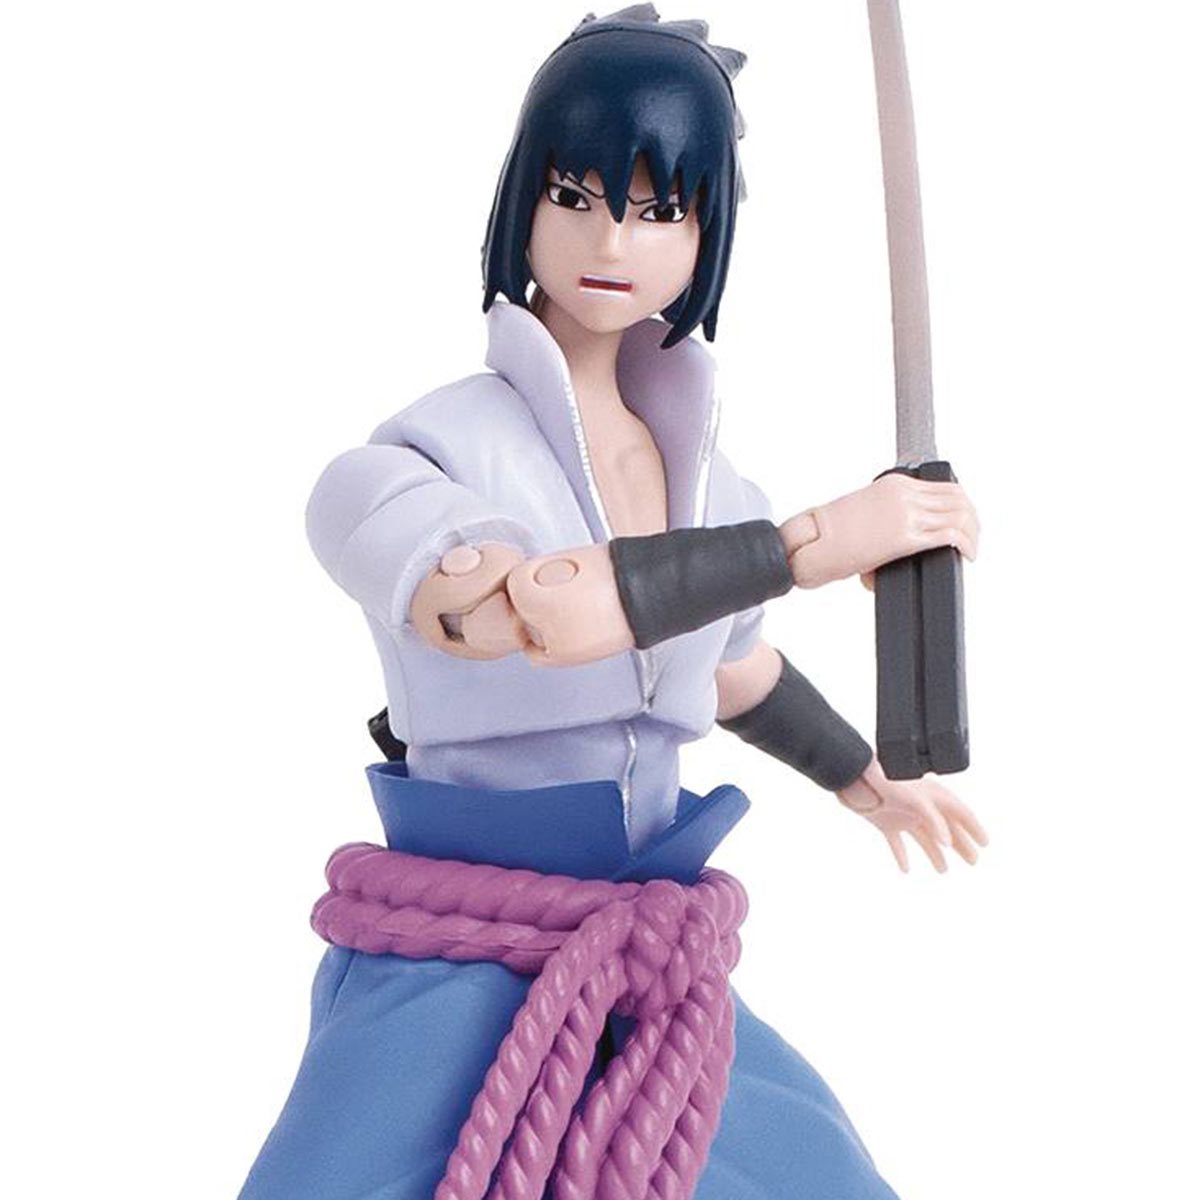 Naruto Anime Figure Shippuden Model Uchiha Itachi Sasuke Pai - Inspire  Uplift